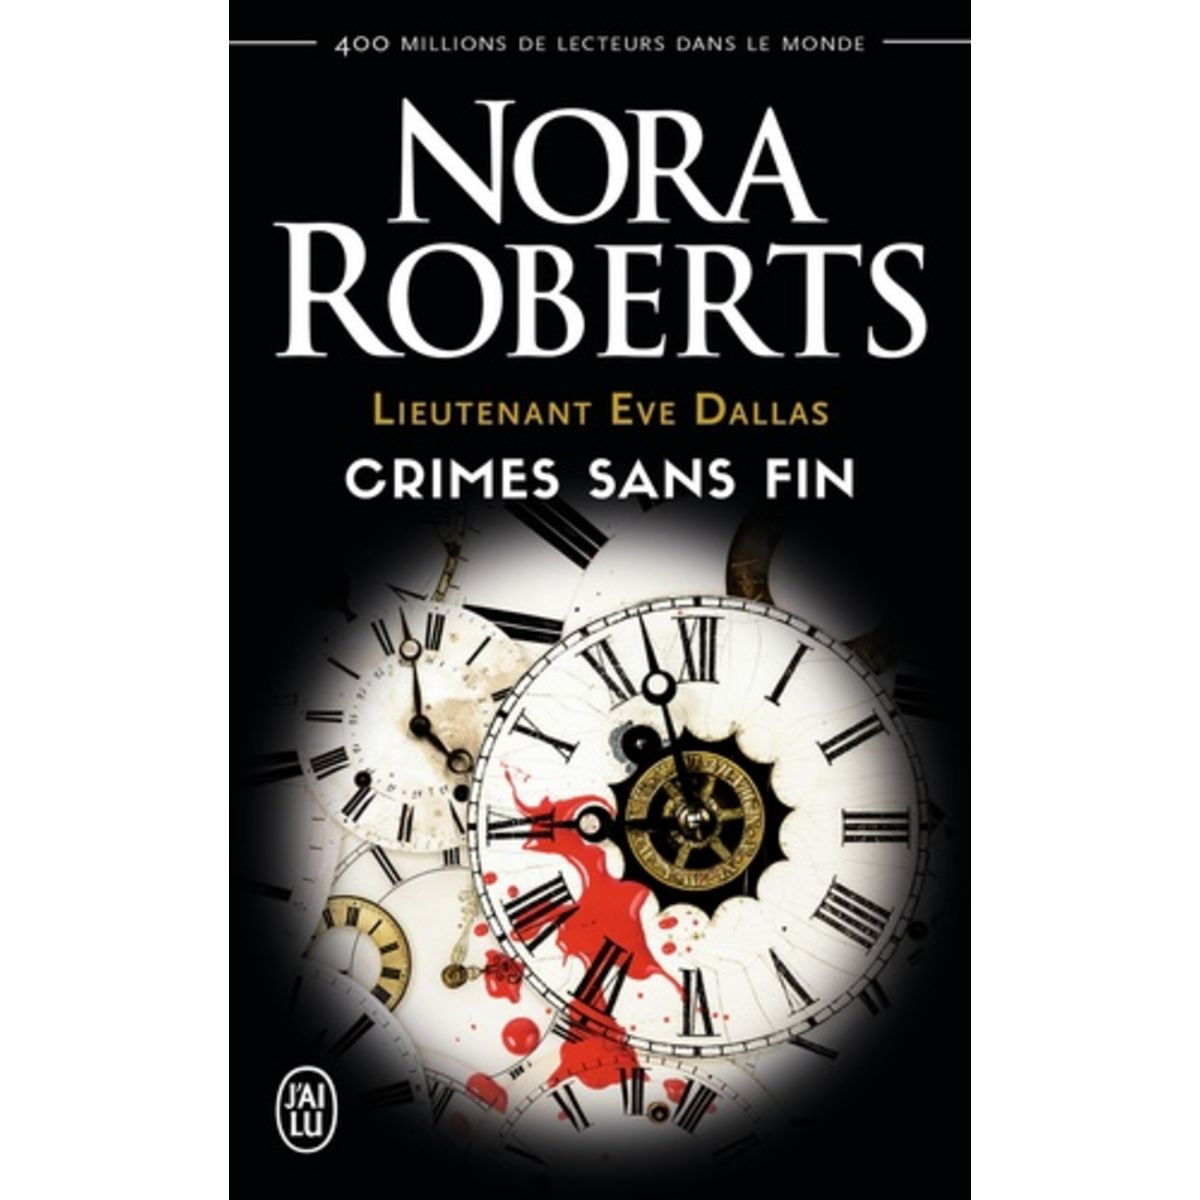  LIEUTENANT EVE DALLAS TOME 24.5 : L'ETERNITE DU CRIME, Roberts Nora